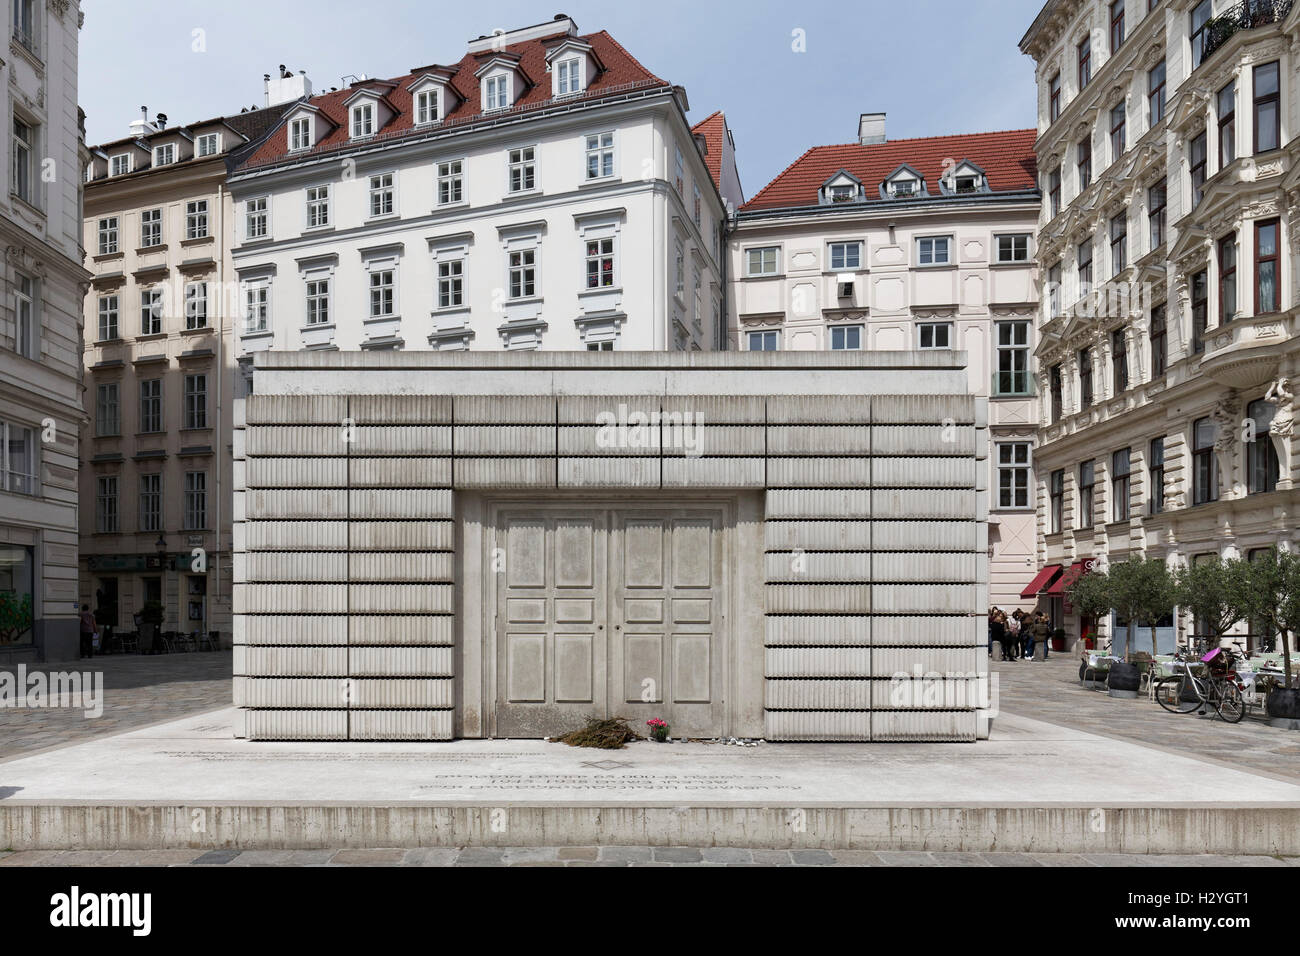 Memorial for the Austrian Jewish victims of the Shoah, by Rachel Whiteread, Judenplatz, Vienna, Austria Stock Photo